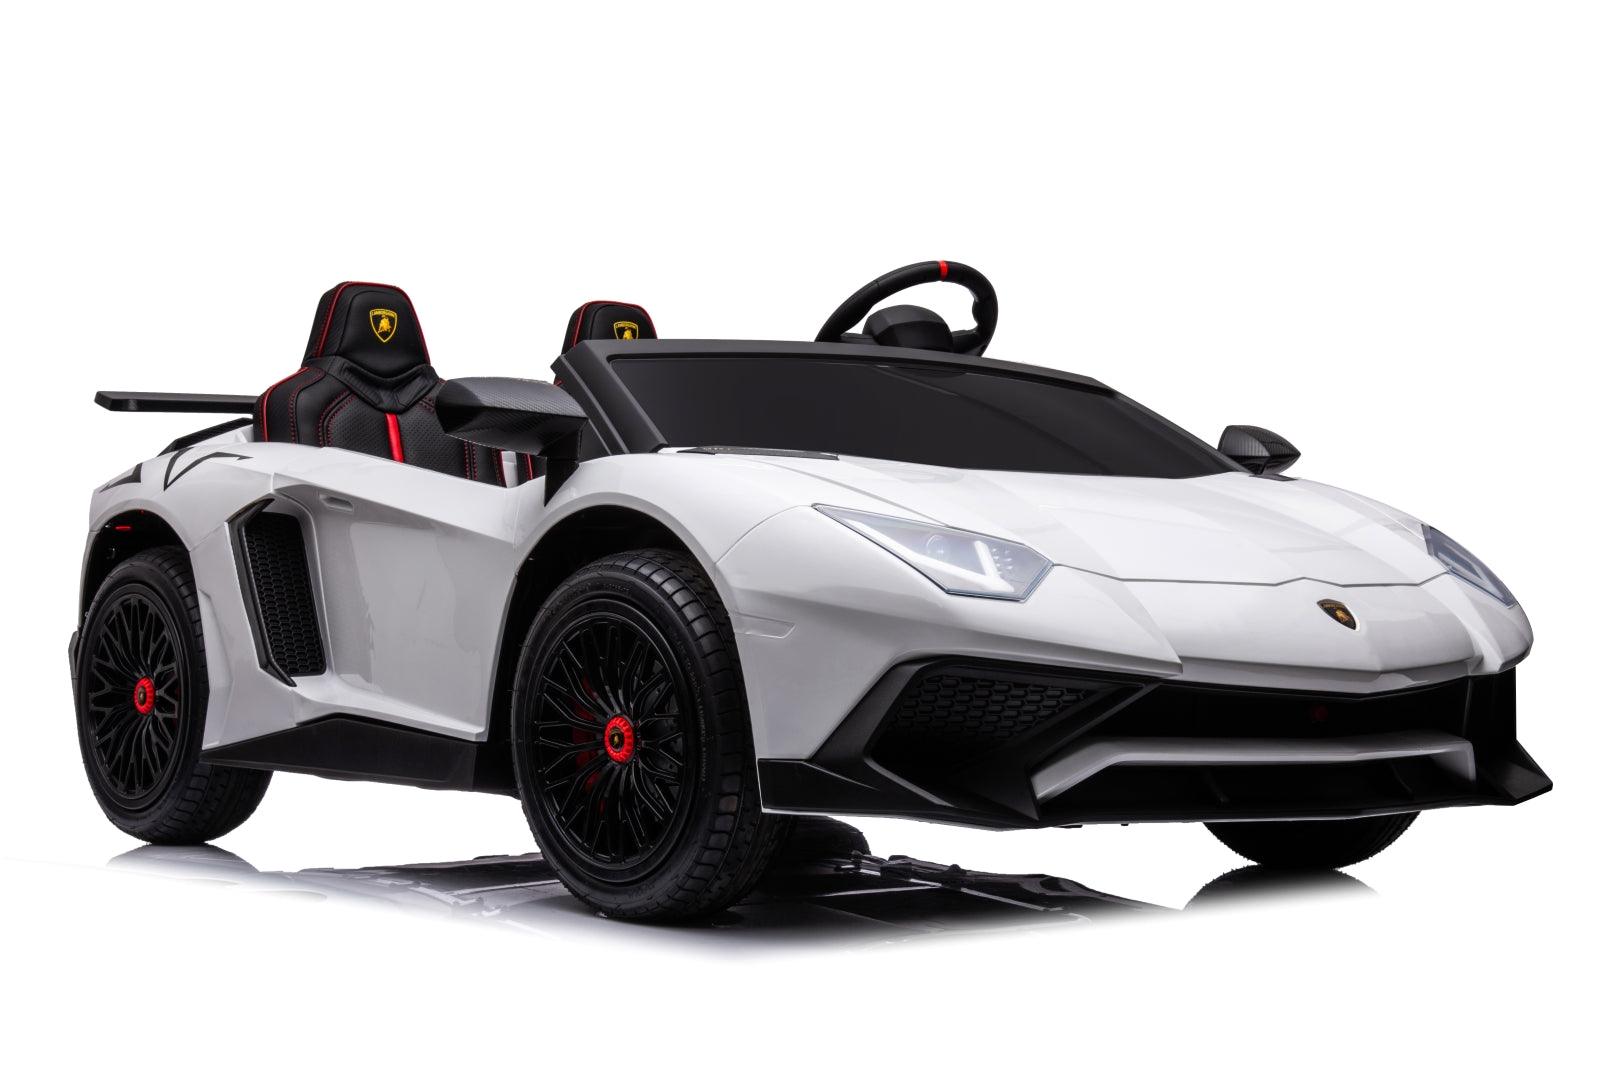 24V Lamborghini Aventador 2 Seater Ride On Car for Kids: Advanced Brushless Motor & Differential for High-Octane Fun-41